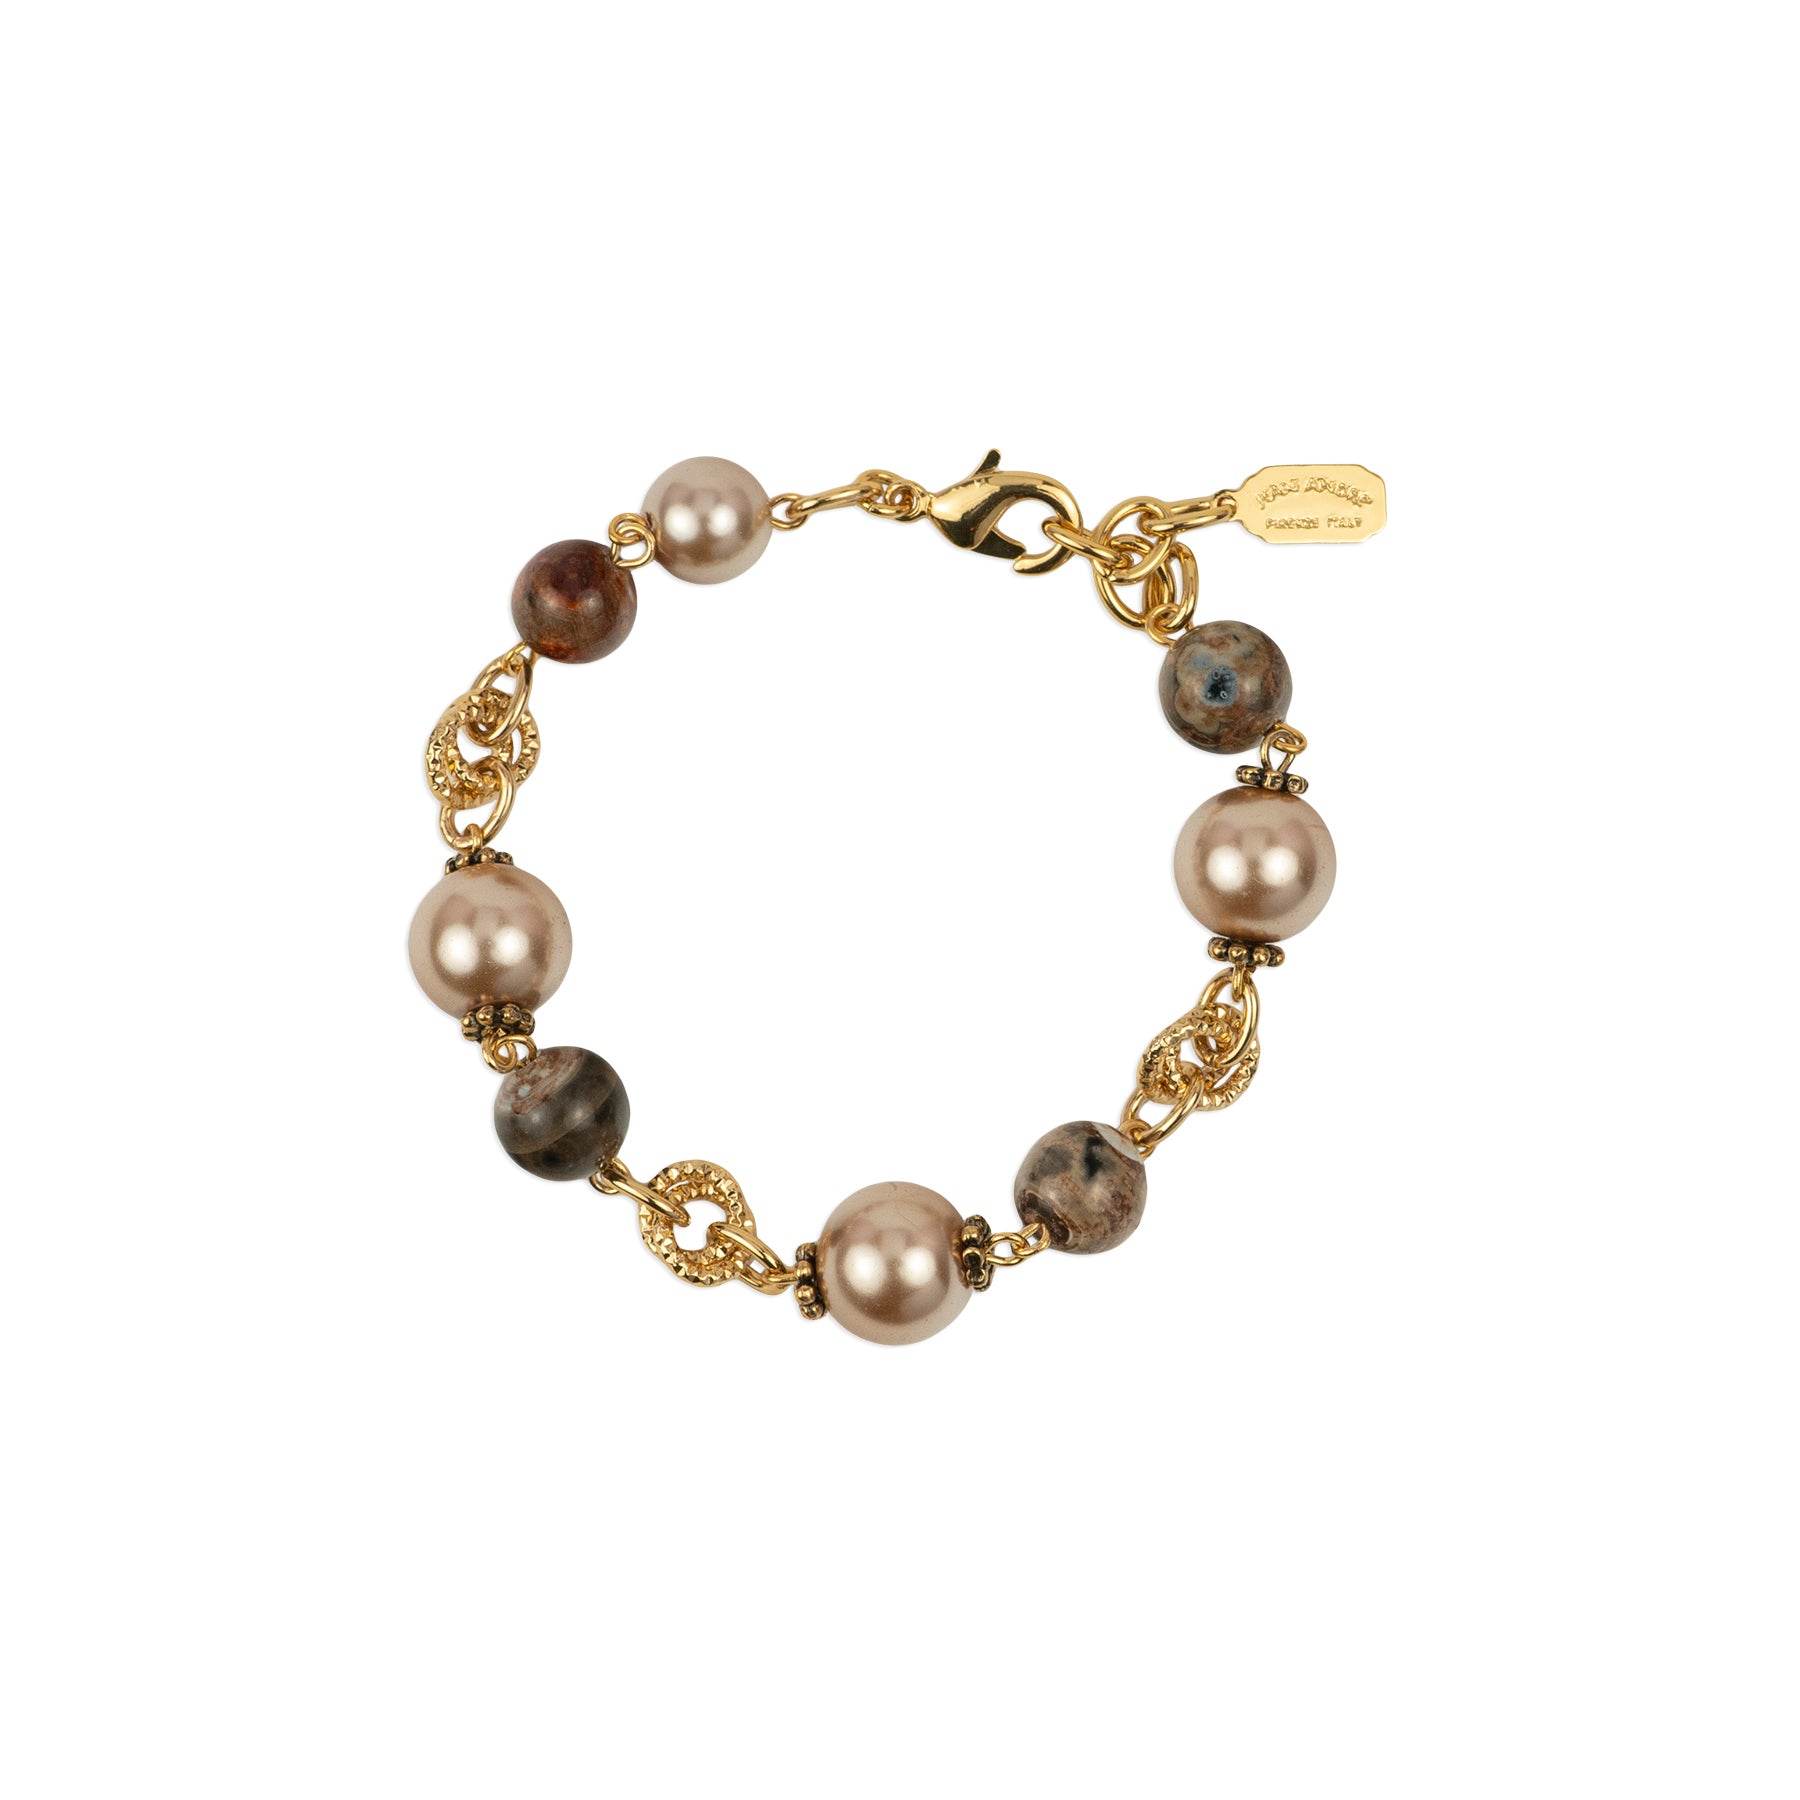 Bracelet of semiprecious stones and pearls